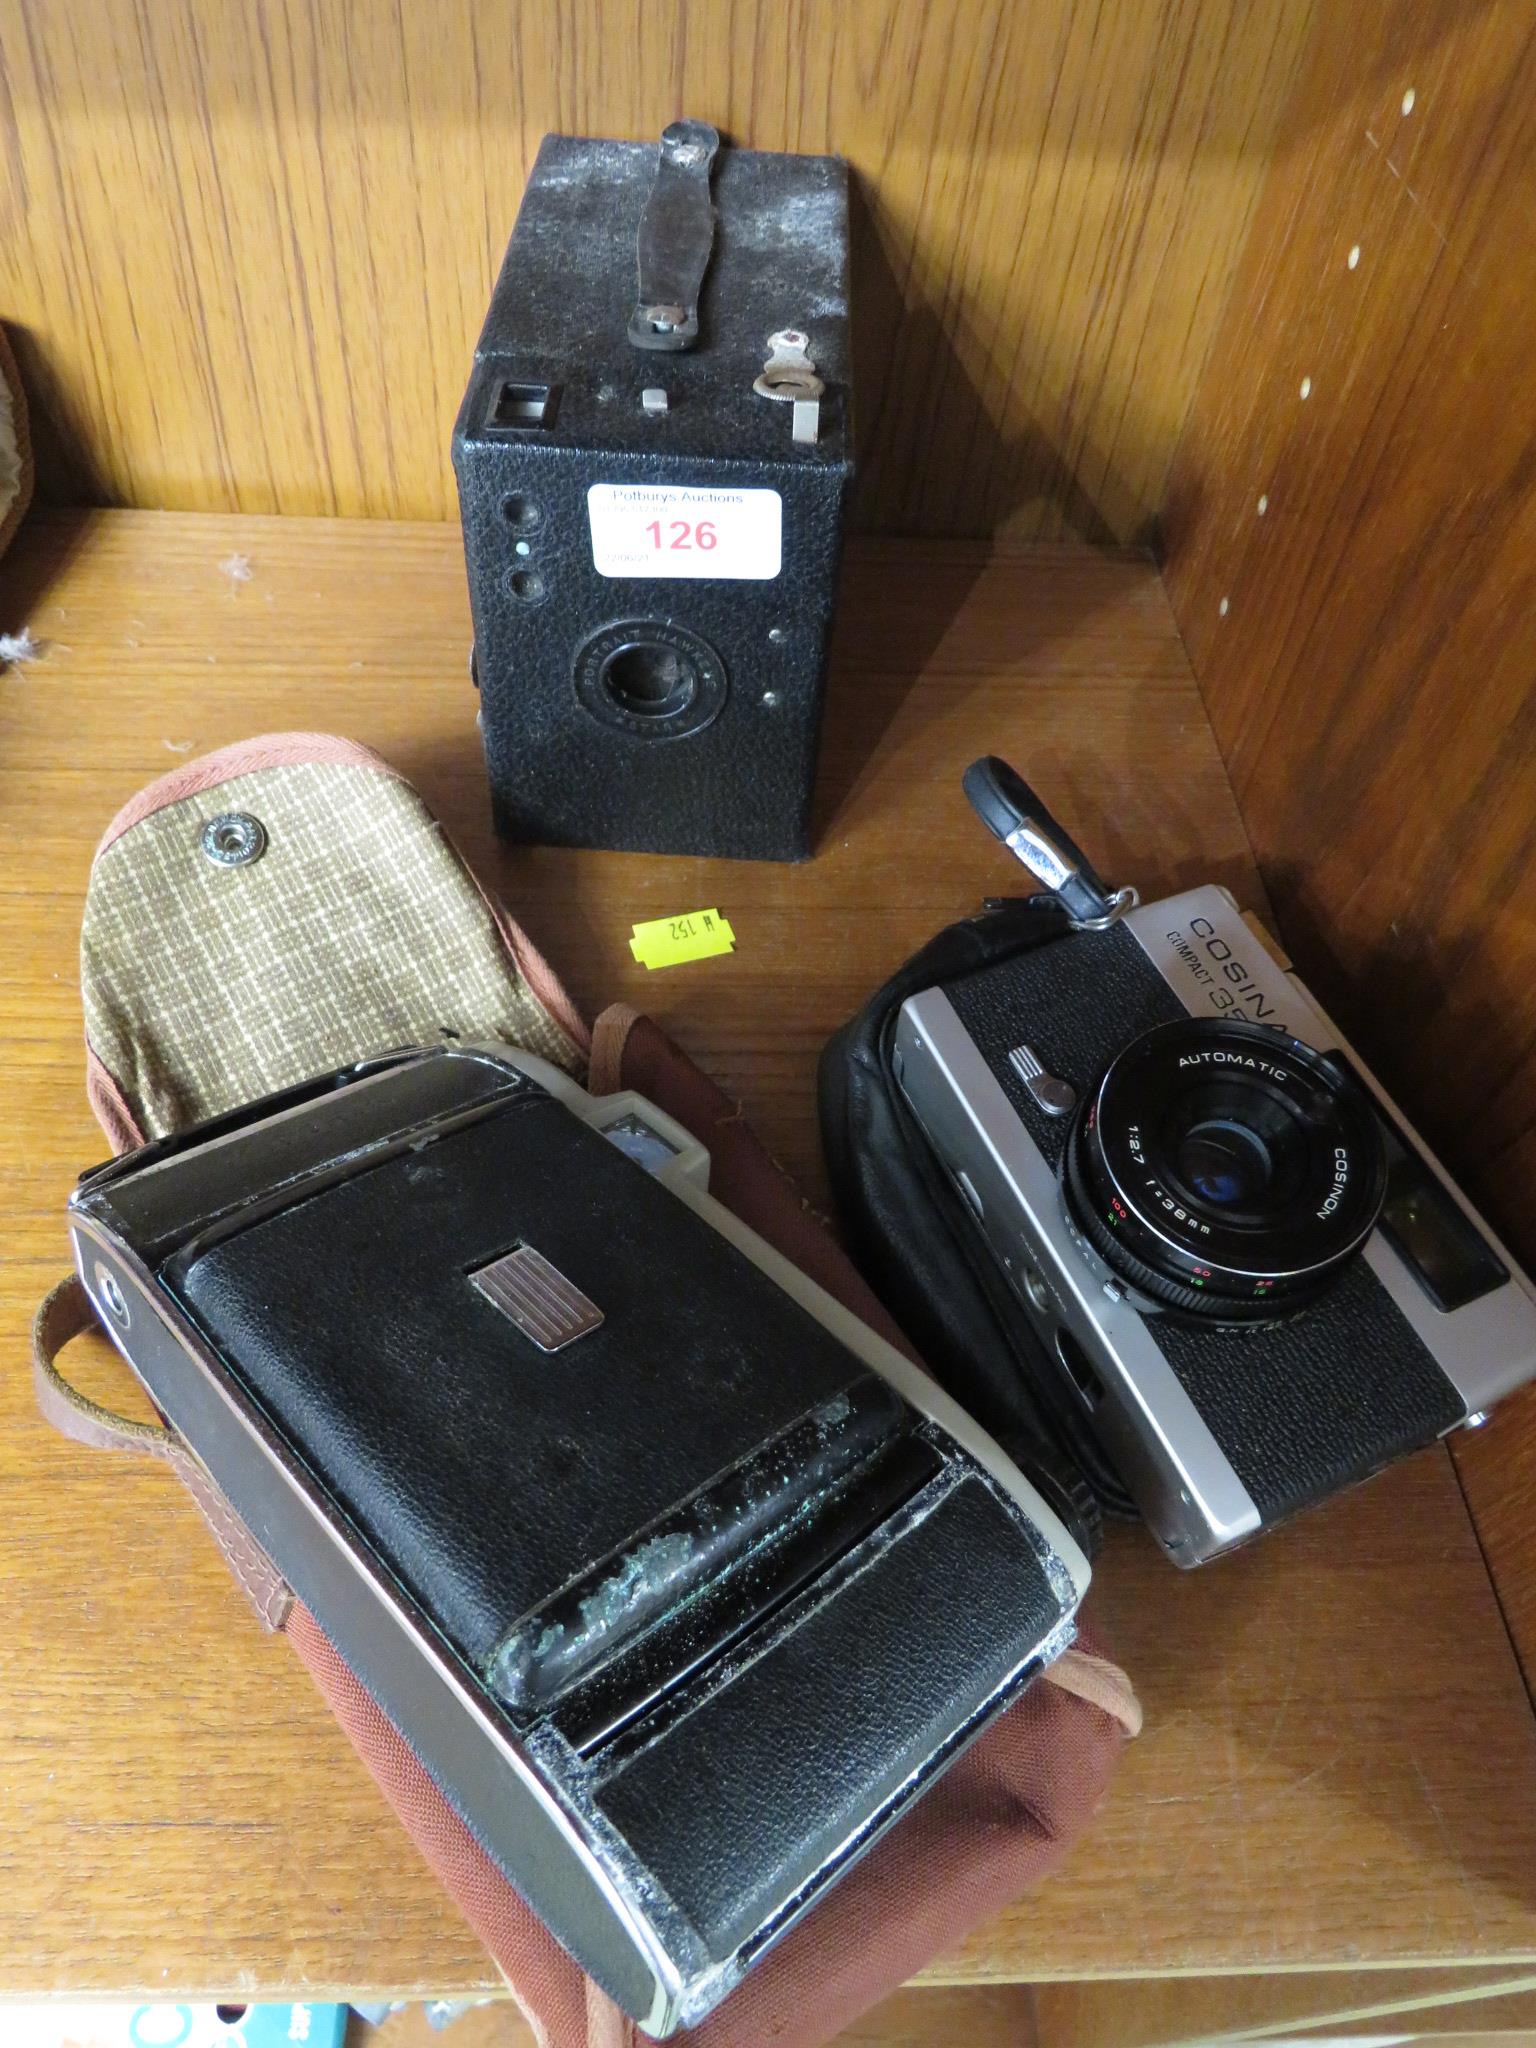 A KODAK FOLDING CAMERA, BOX CAMERA AND A COSINA COMPACT 35 E FILM CAMERA.